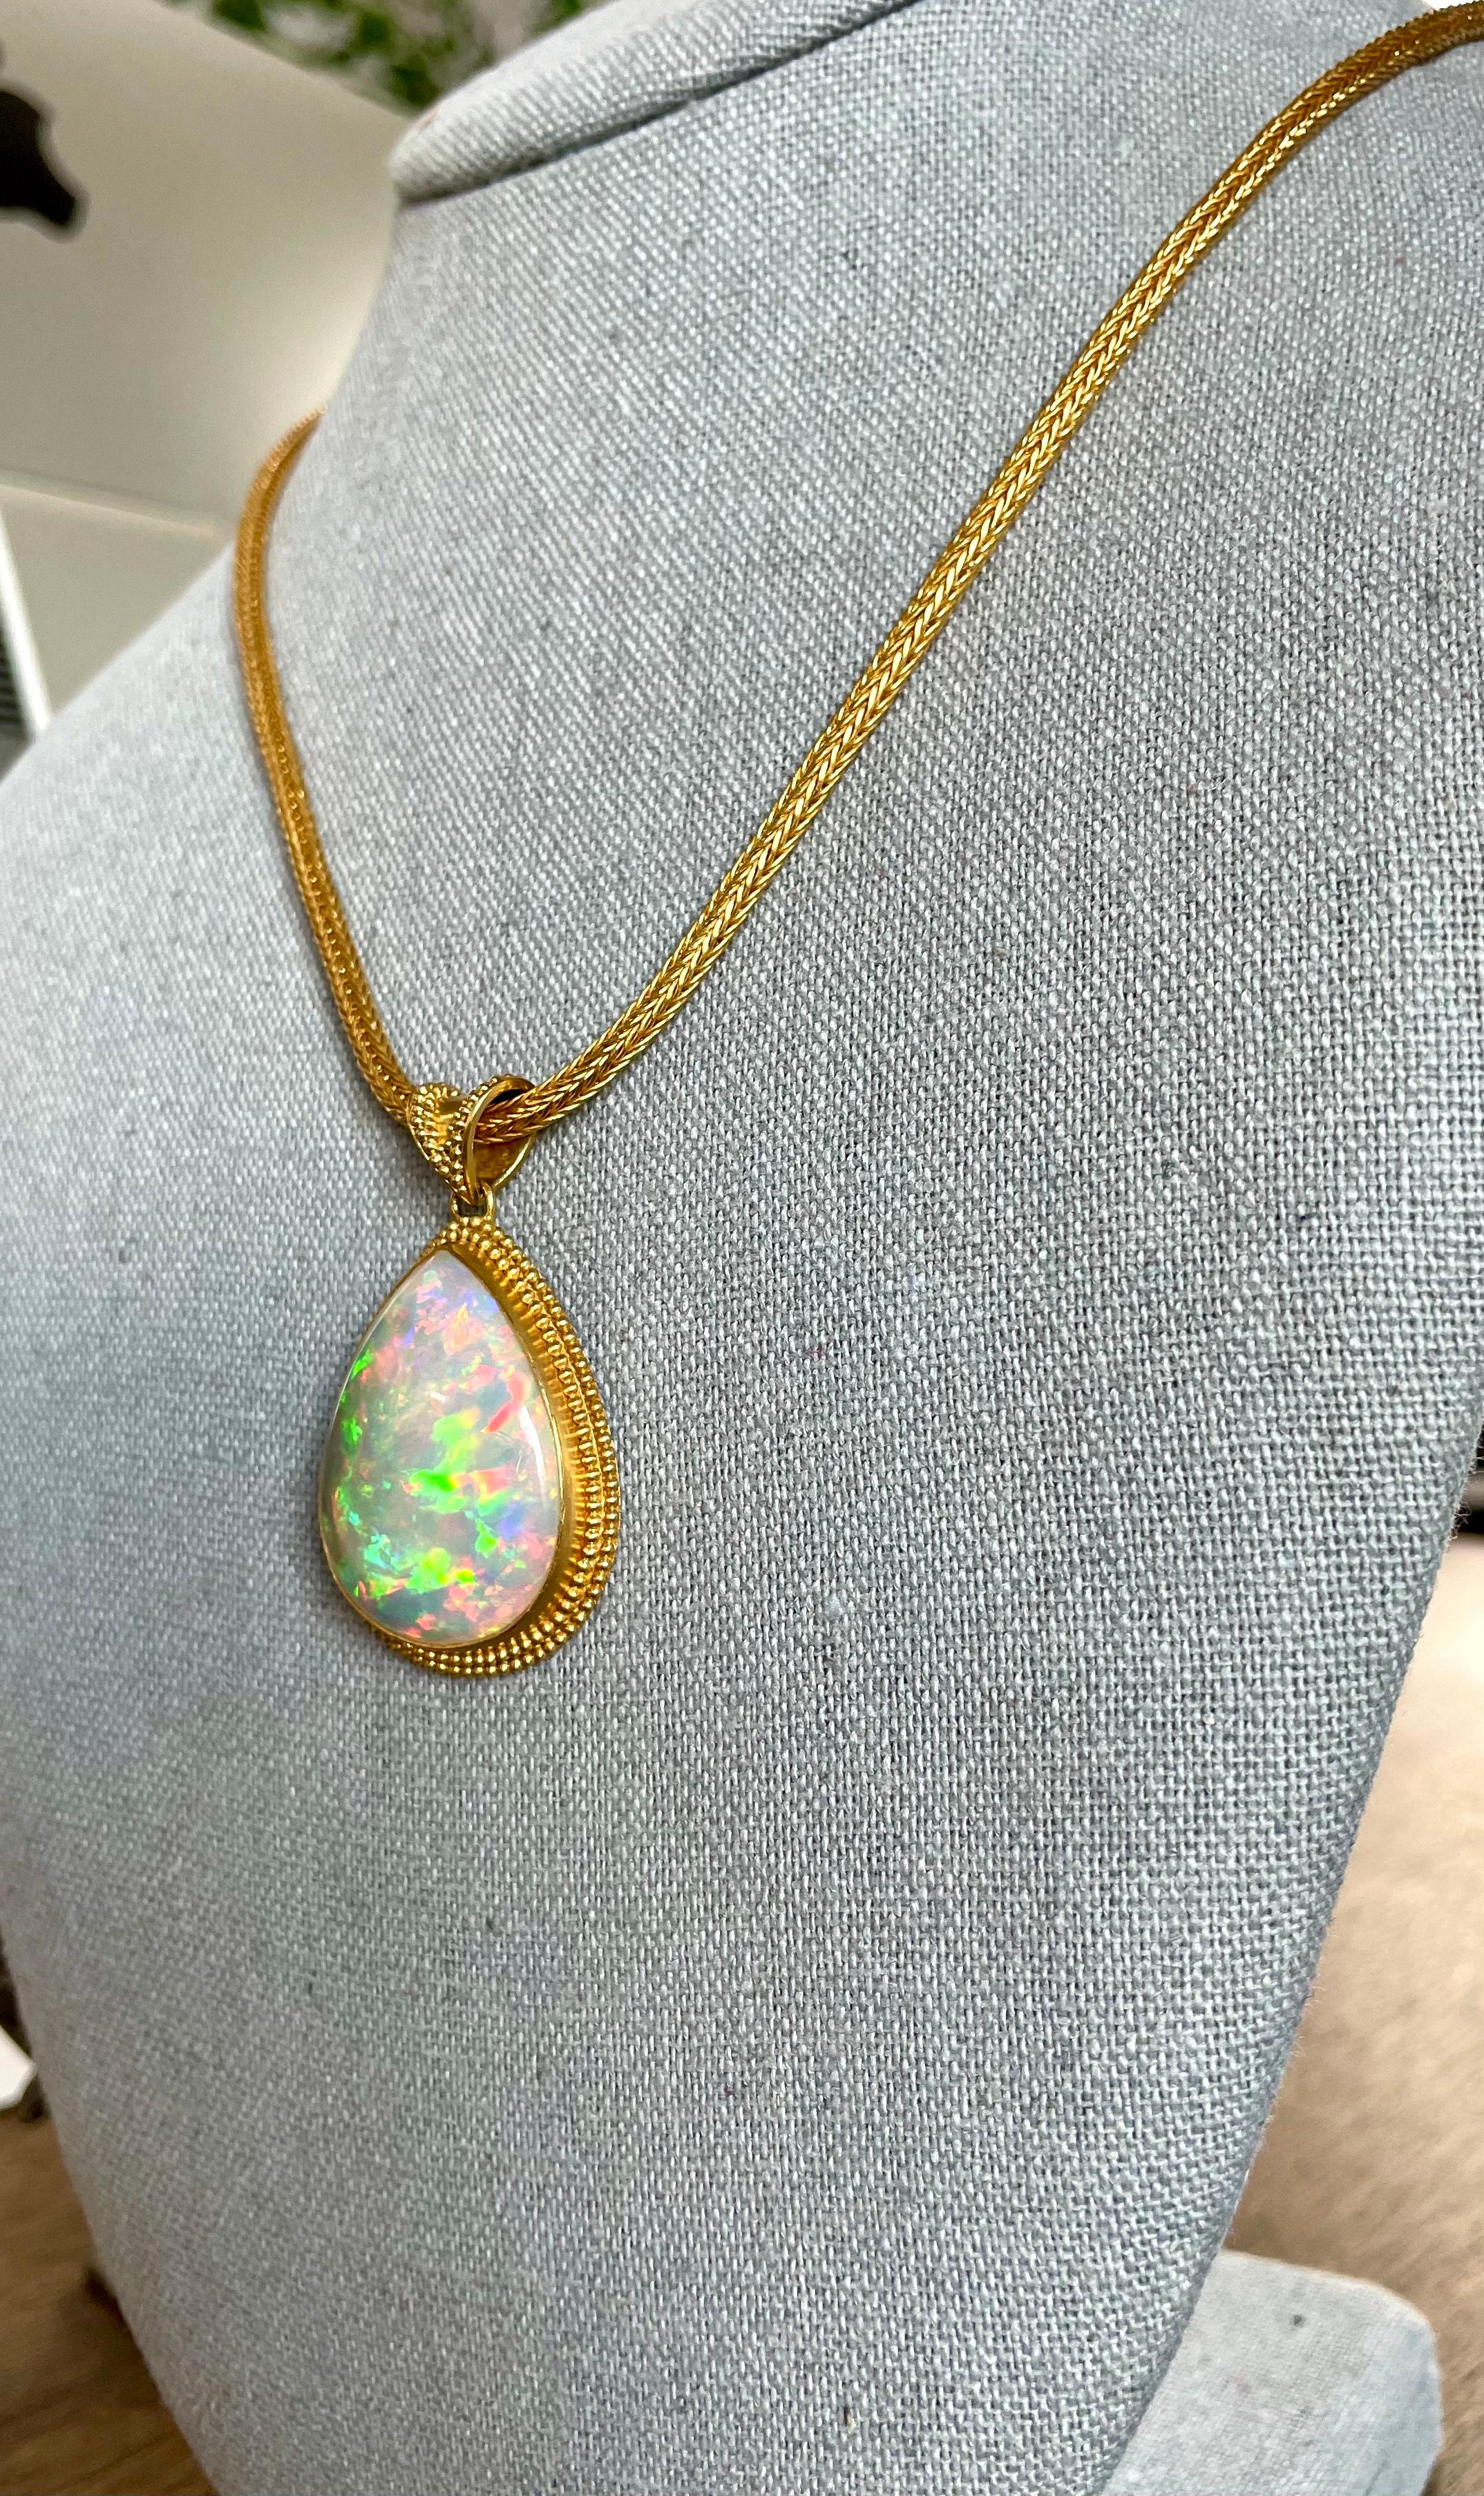 large opal necklace